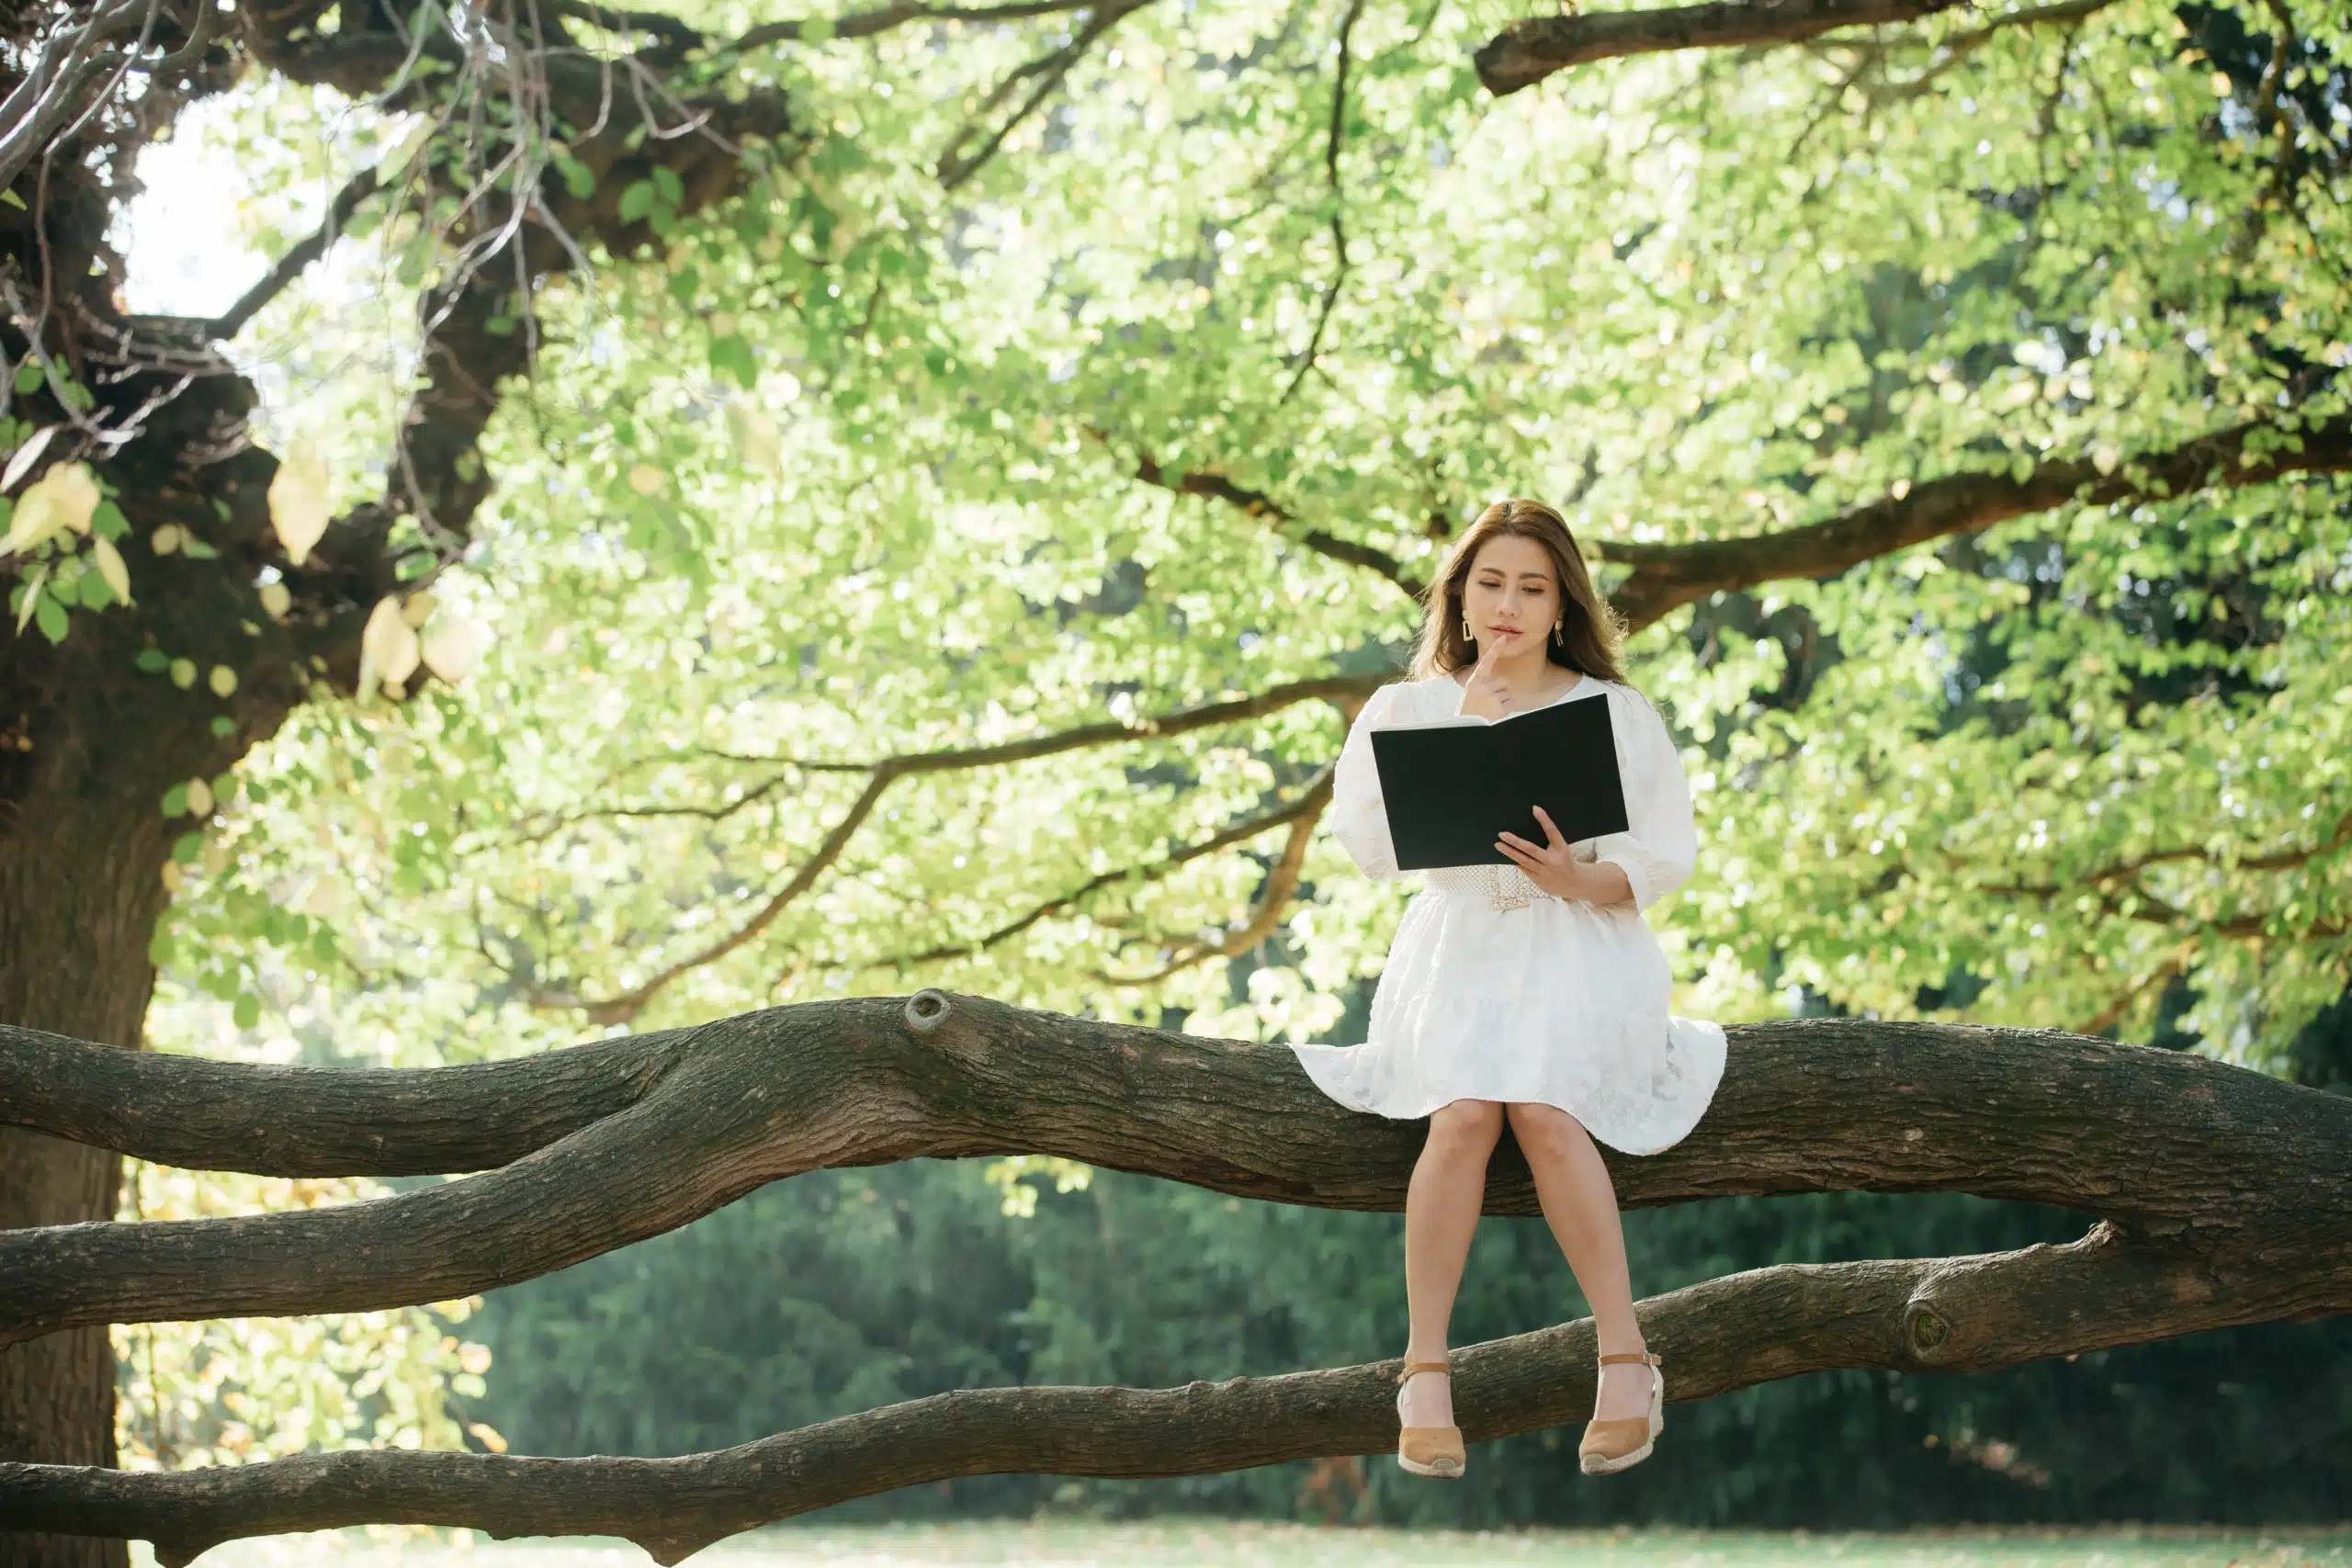 Beautiful woman in white dress sit on tree branch writing